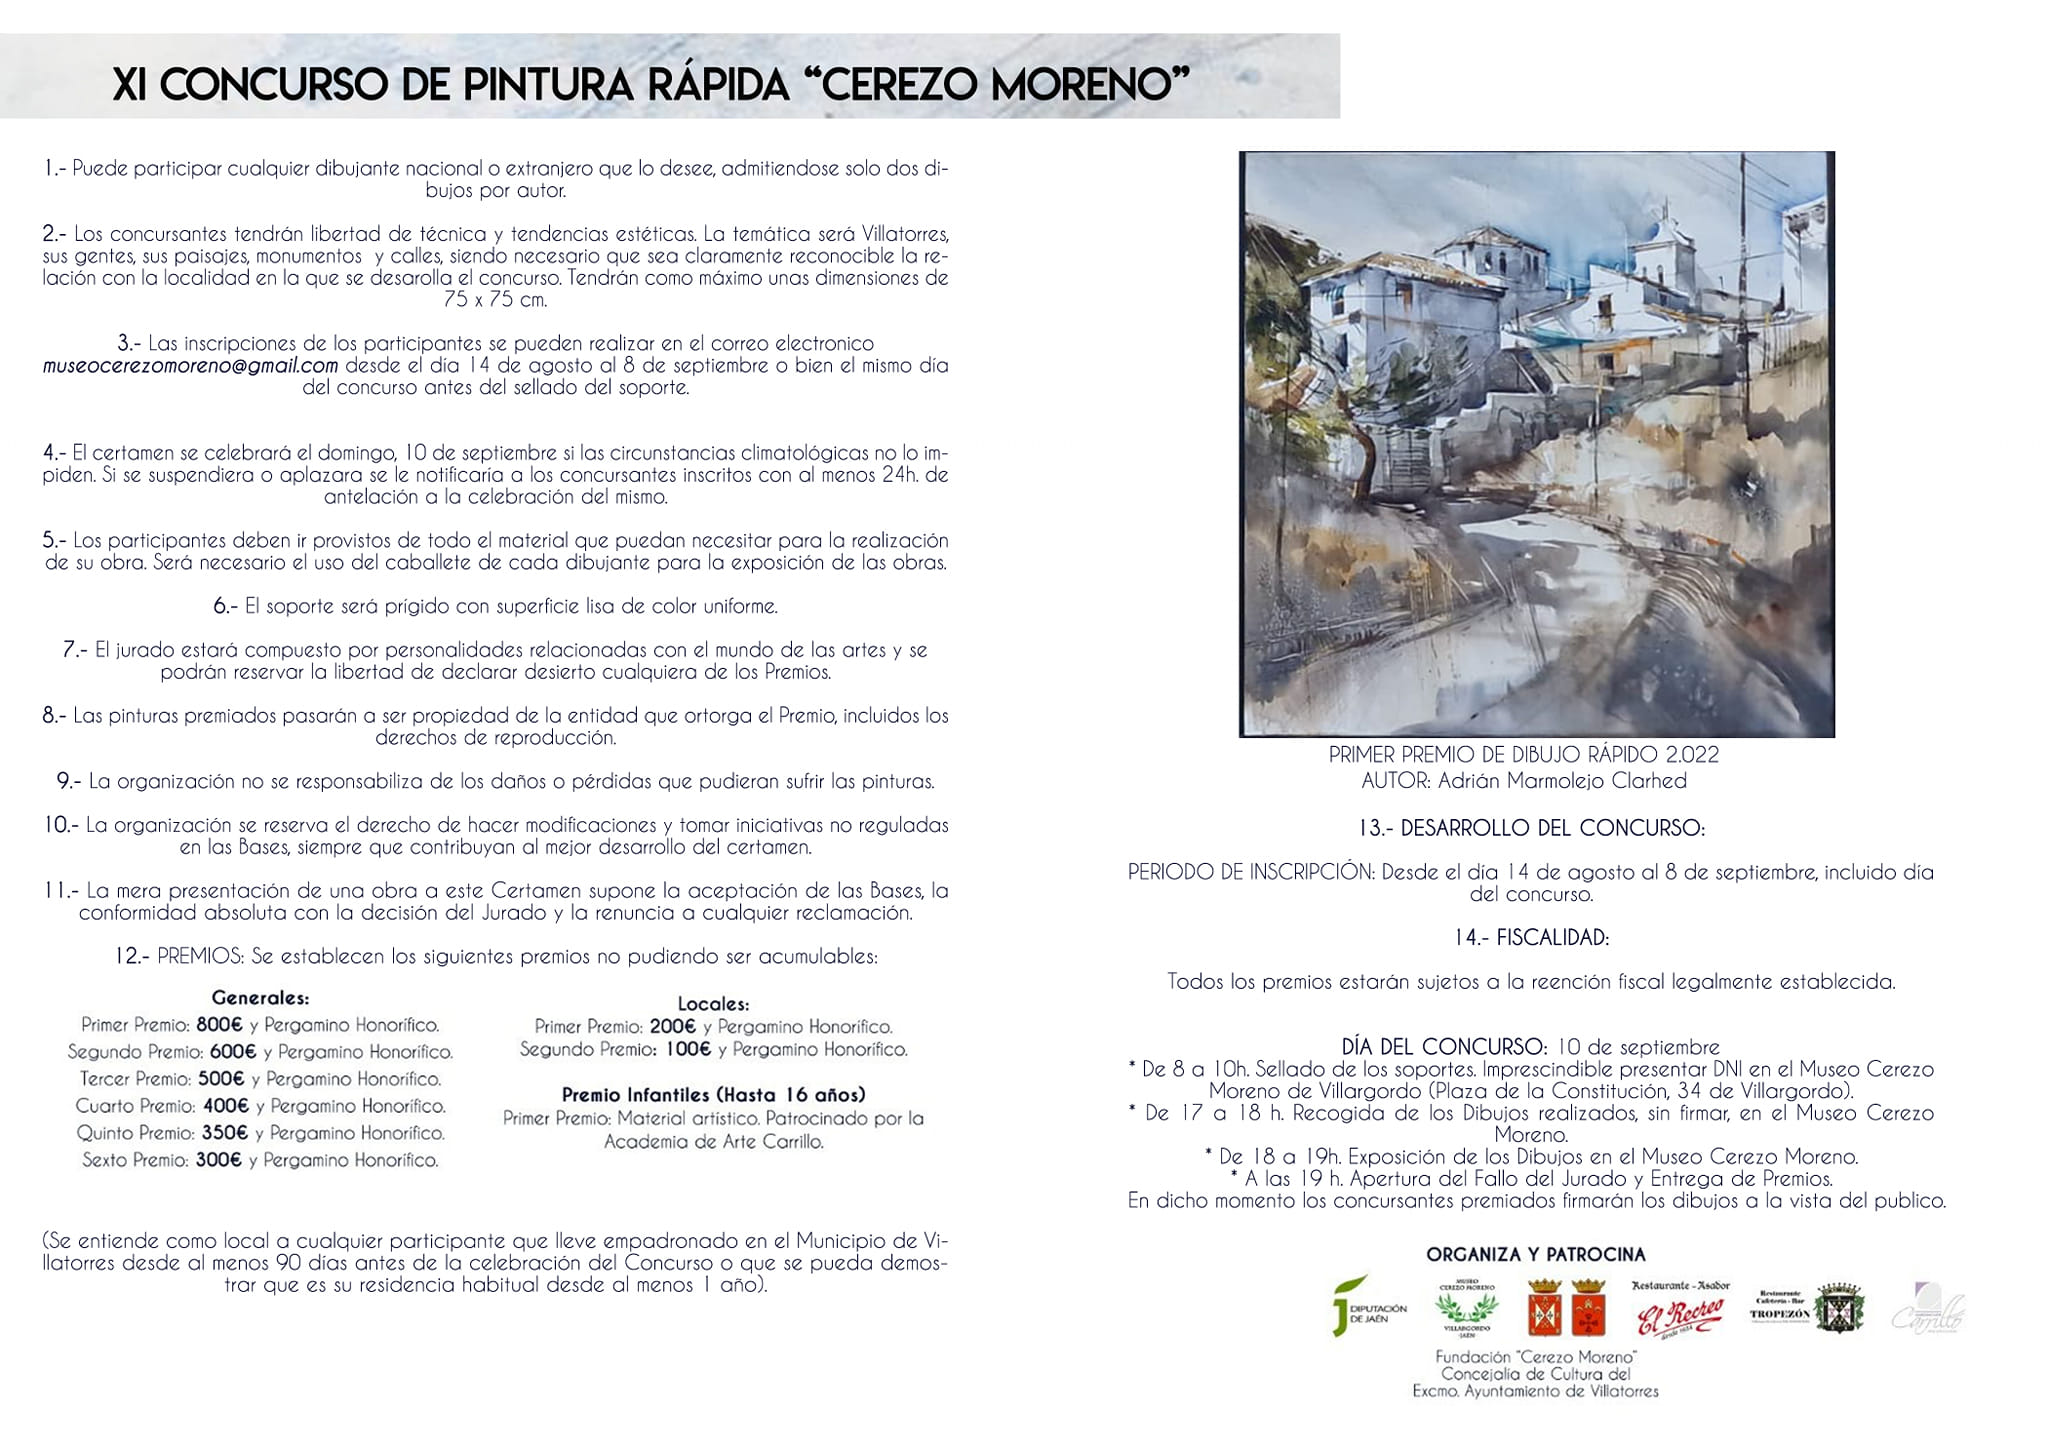 XI Concurso de Pintura Rápida Cerezo Moreno